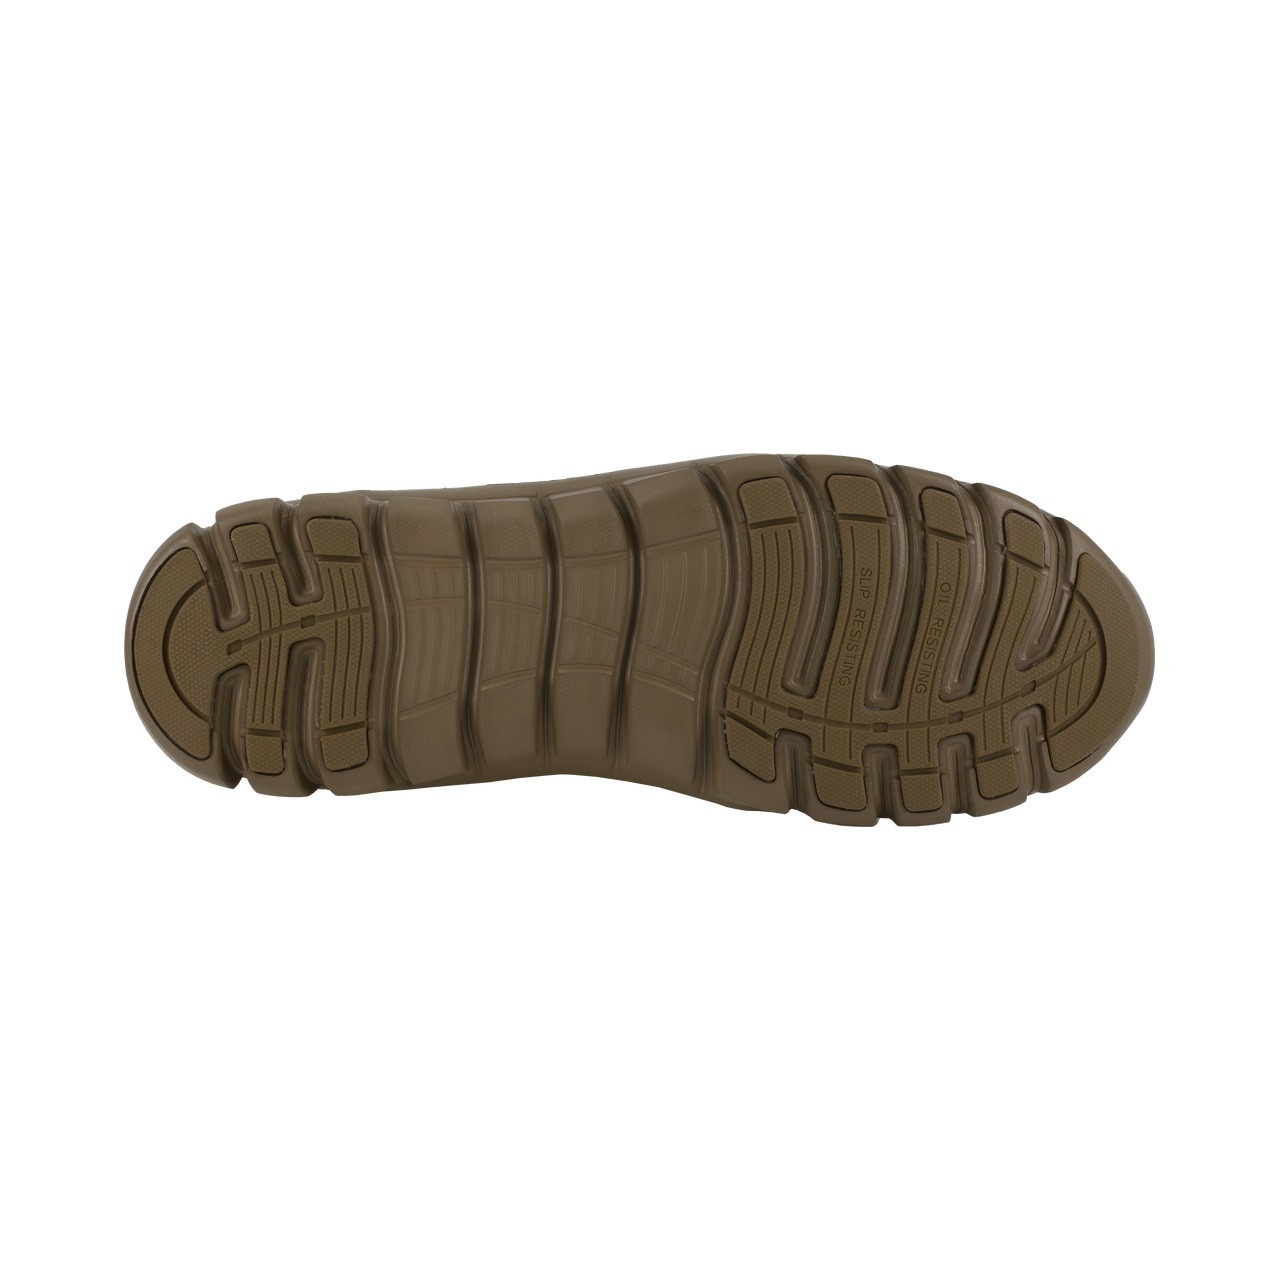 Reebok Men's Sublite Cushion Tactical Boot Composite Toe Coyote Brown